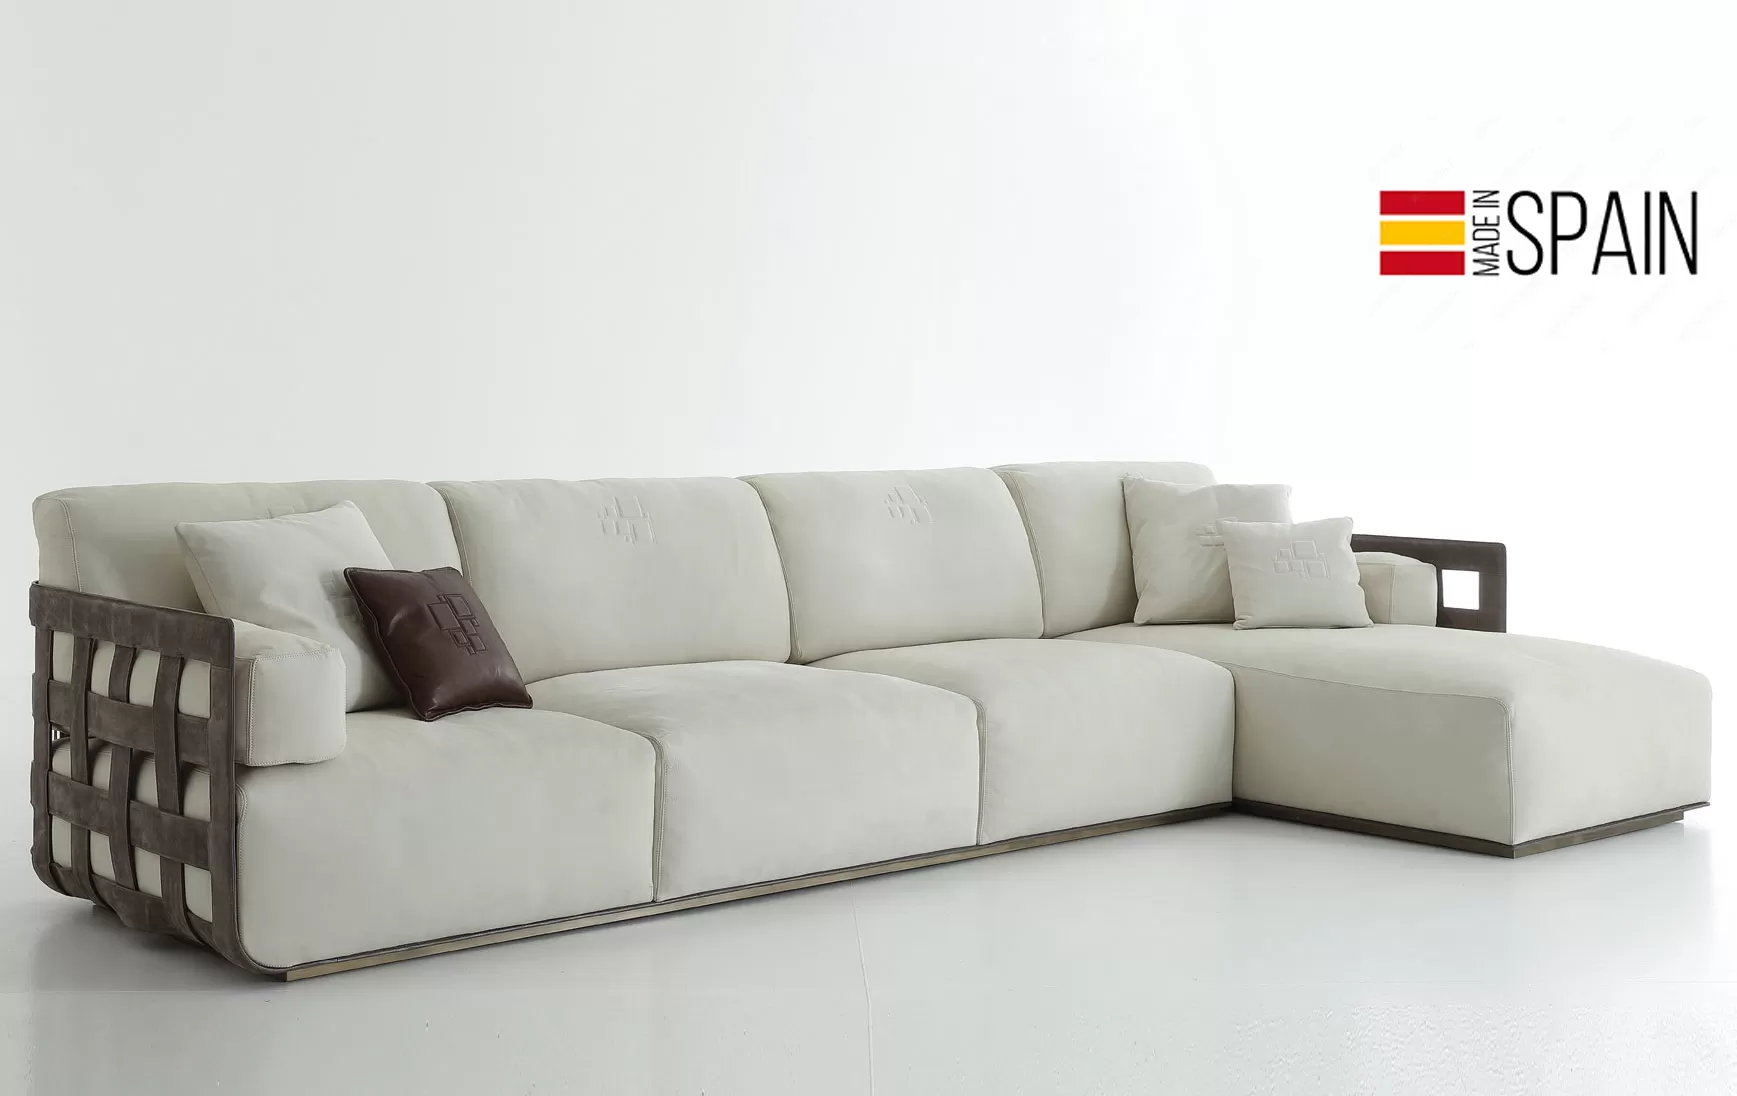 Spain furniture1